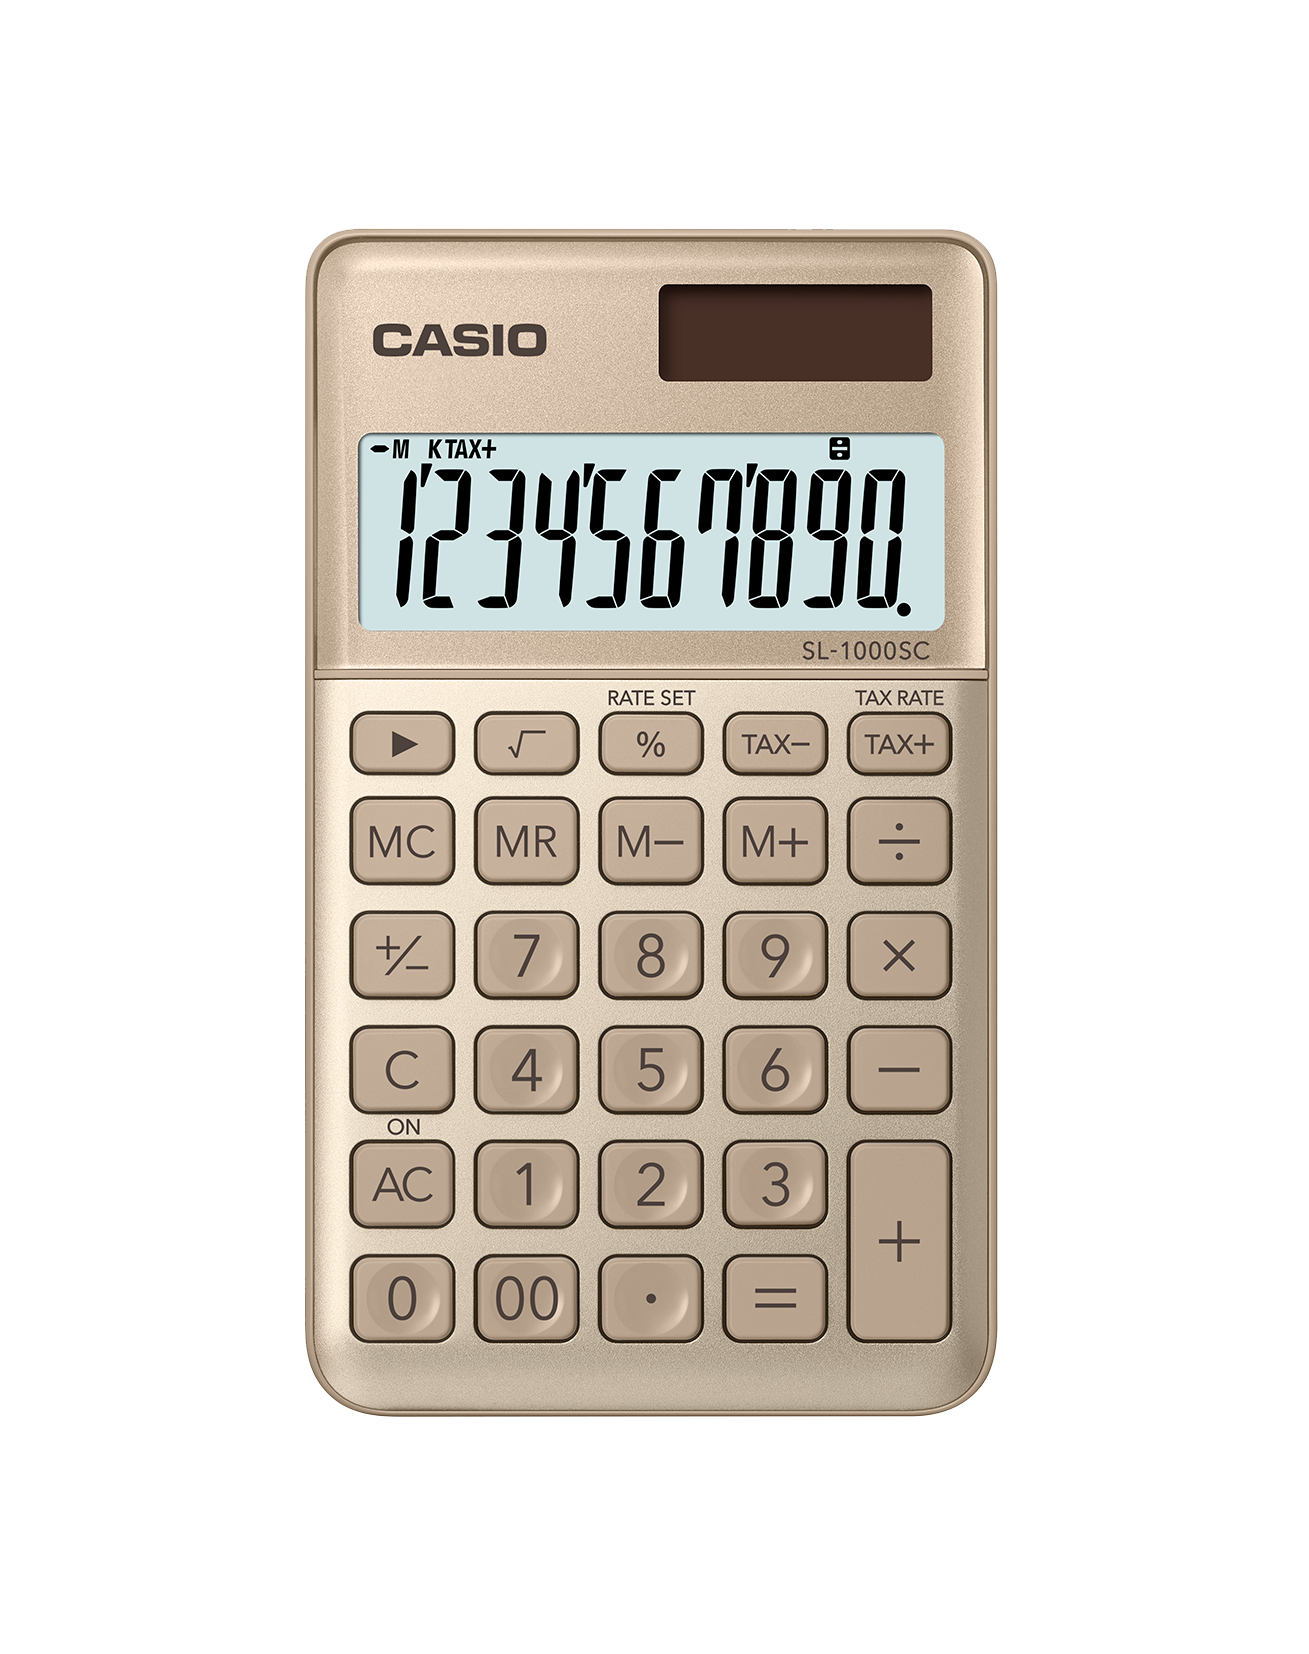 CASIO SL-1000SC Calculadoras de Bolso com Estilo